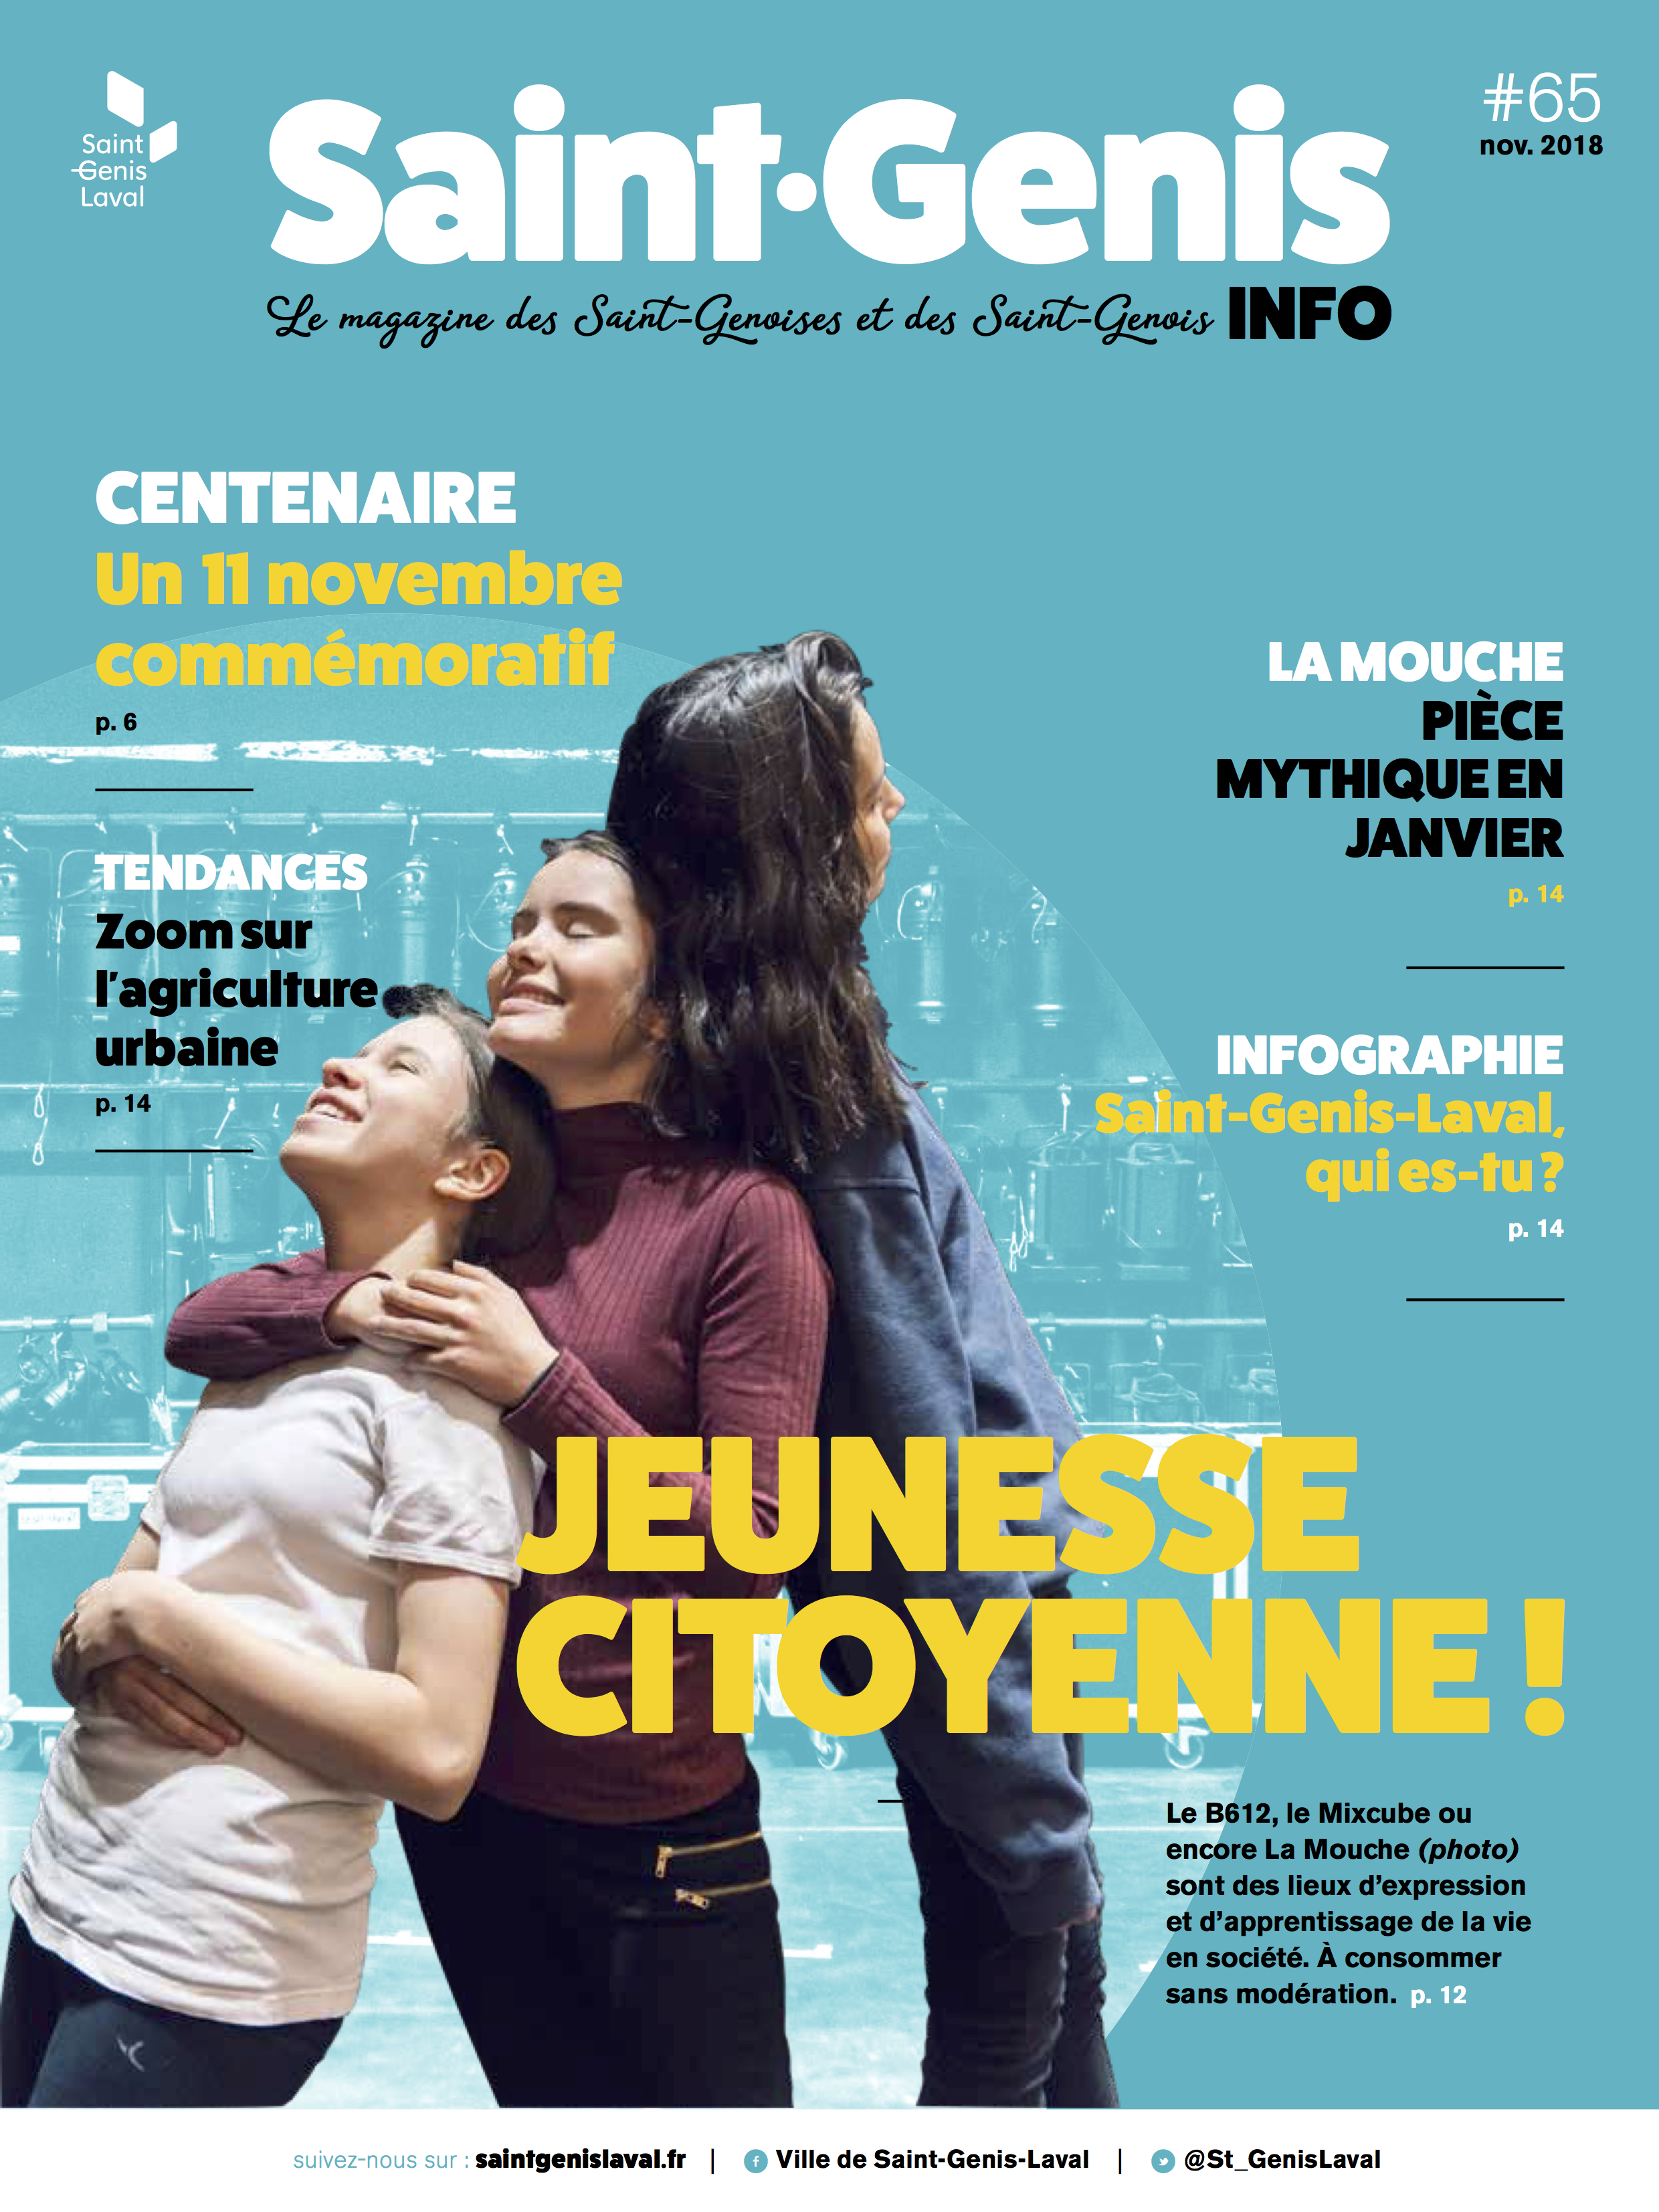 Saint-Genis Info, version 2018